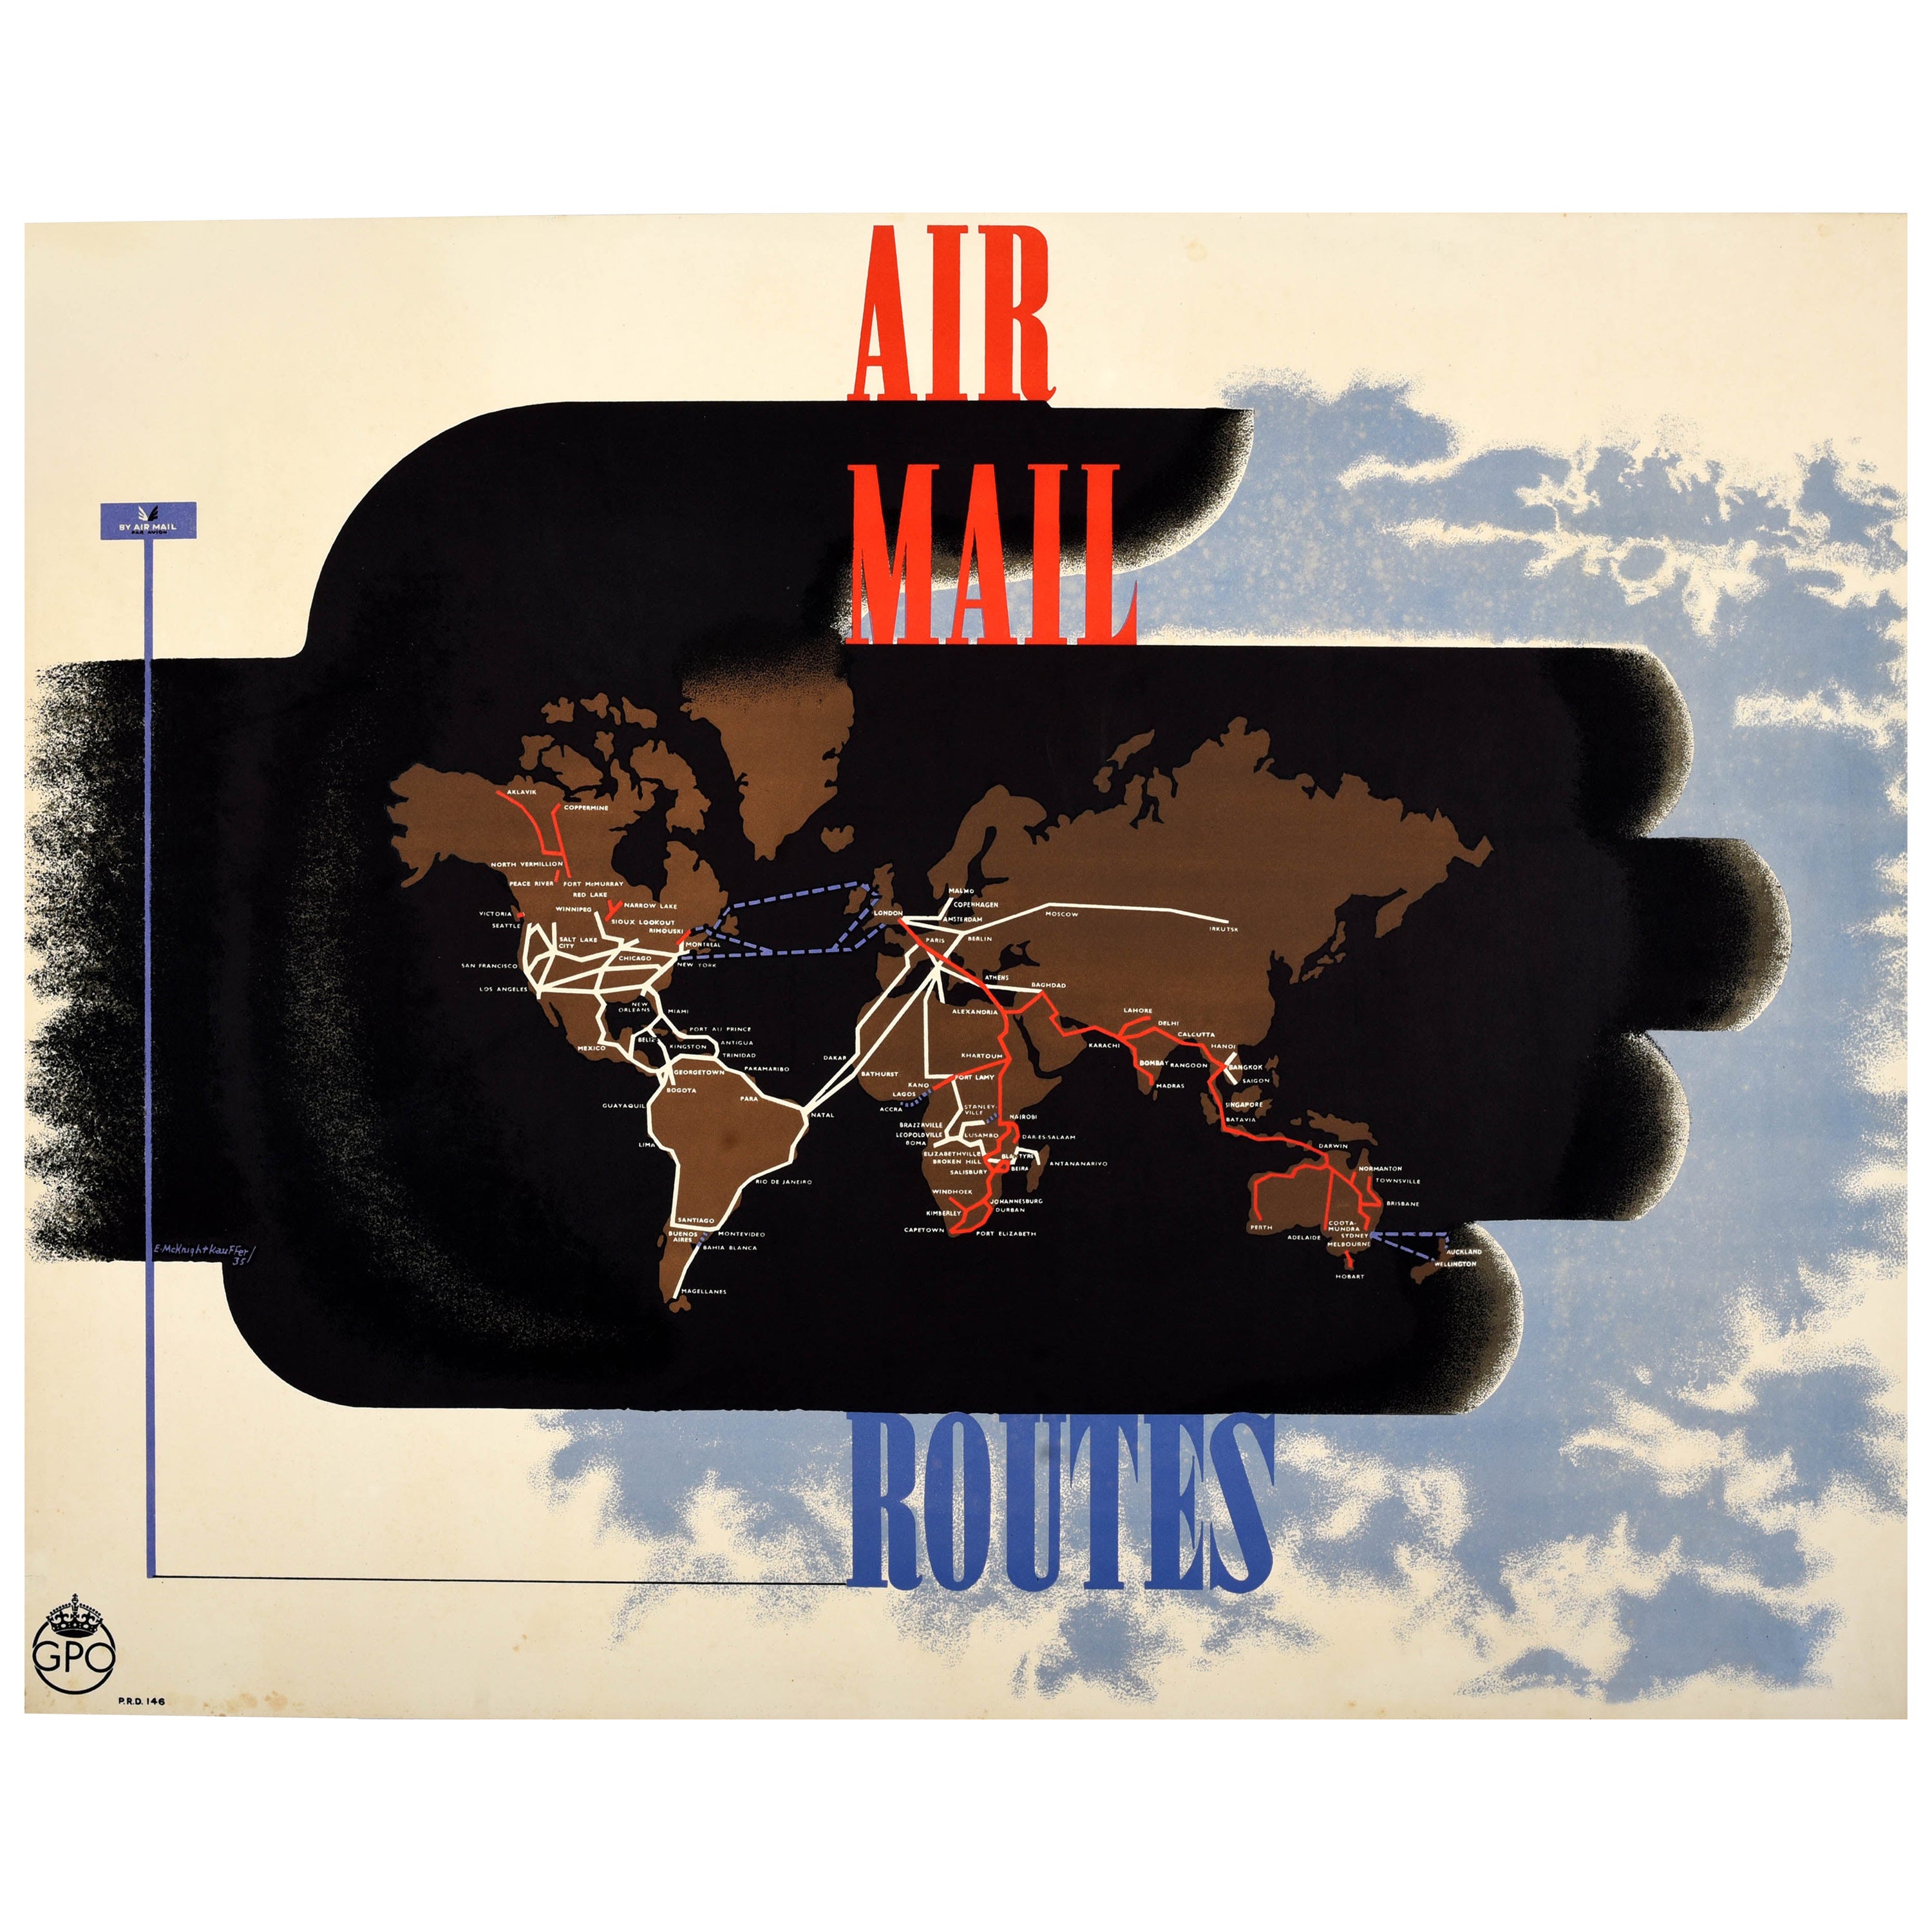 Rare Original Vintage Advertising Poster Air Mail Routes GPO Mcknight Kauffer